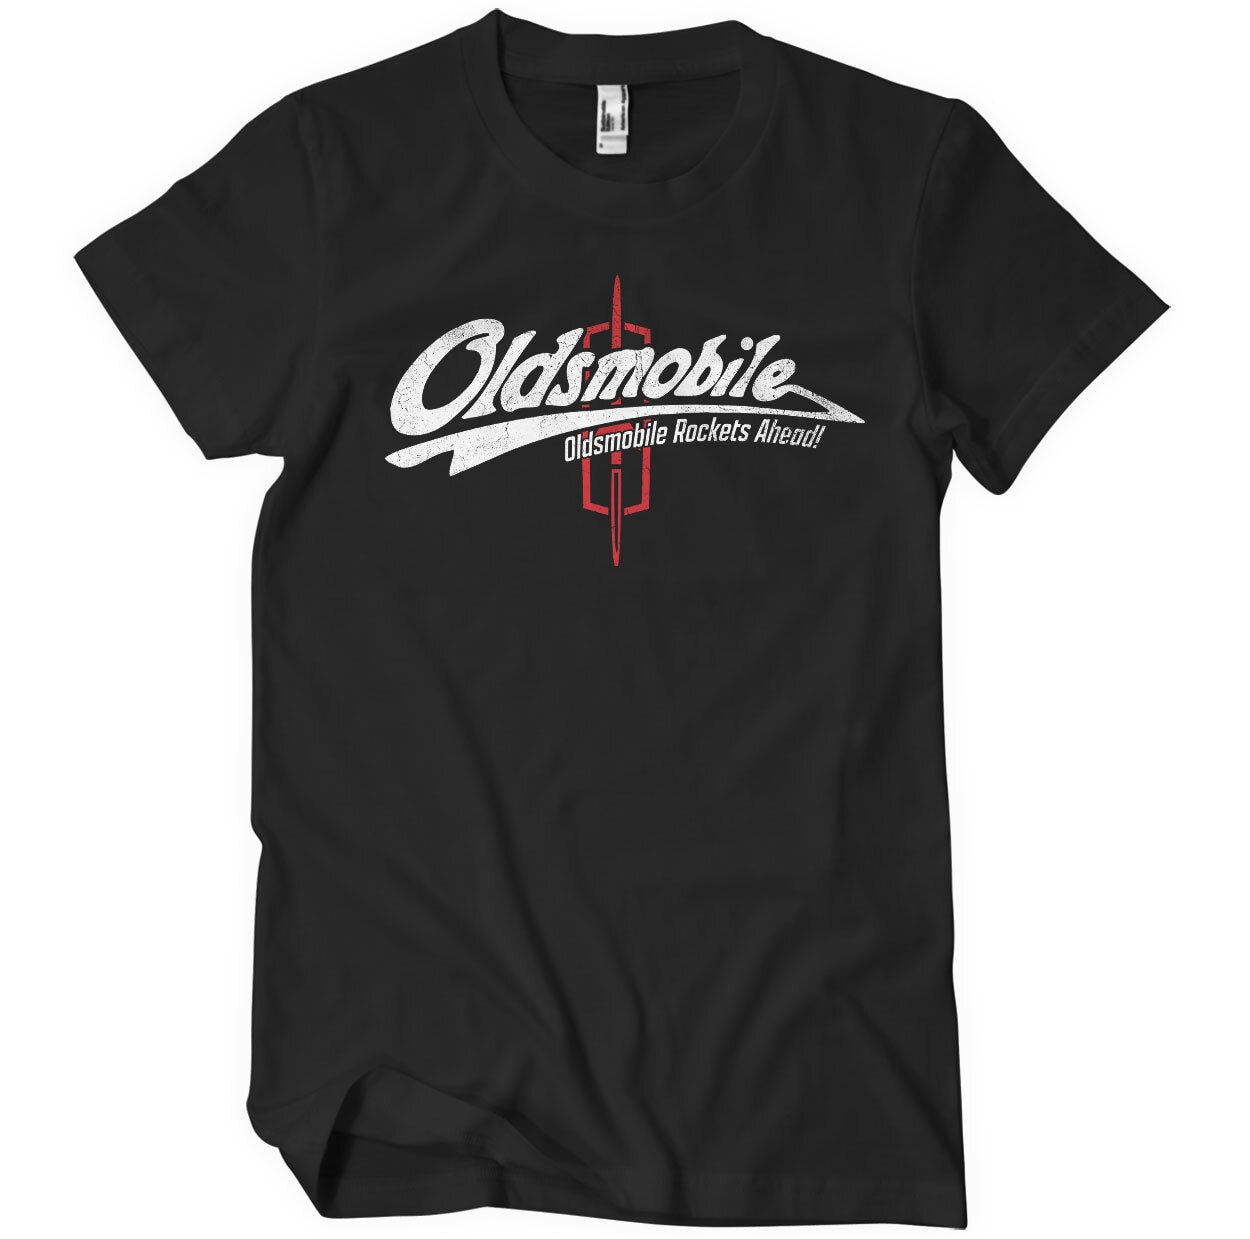 Oldsmobile Rockets Ahead T-Shirt